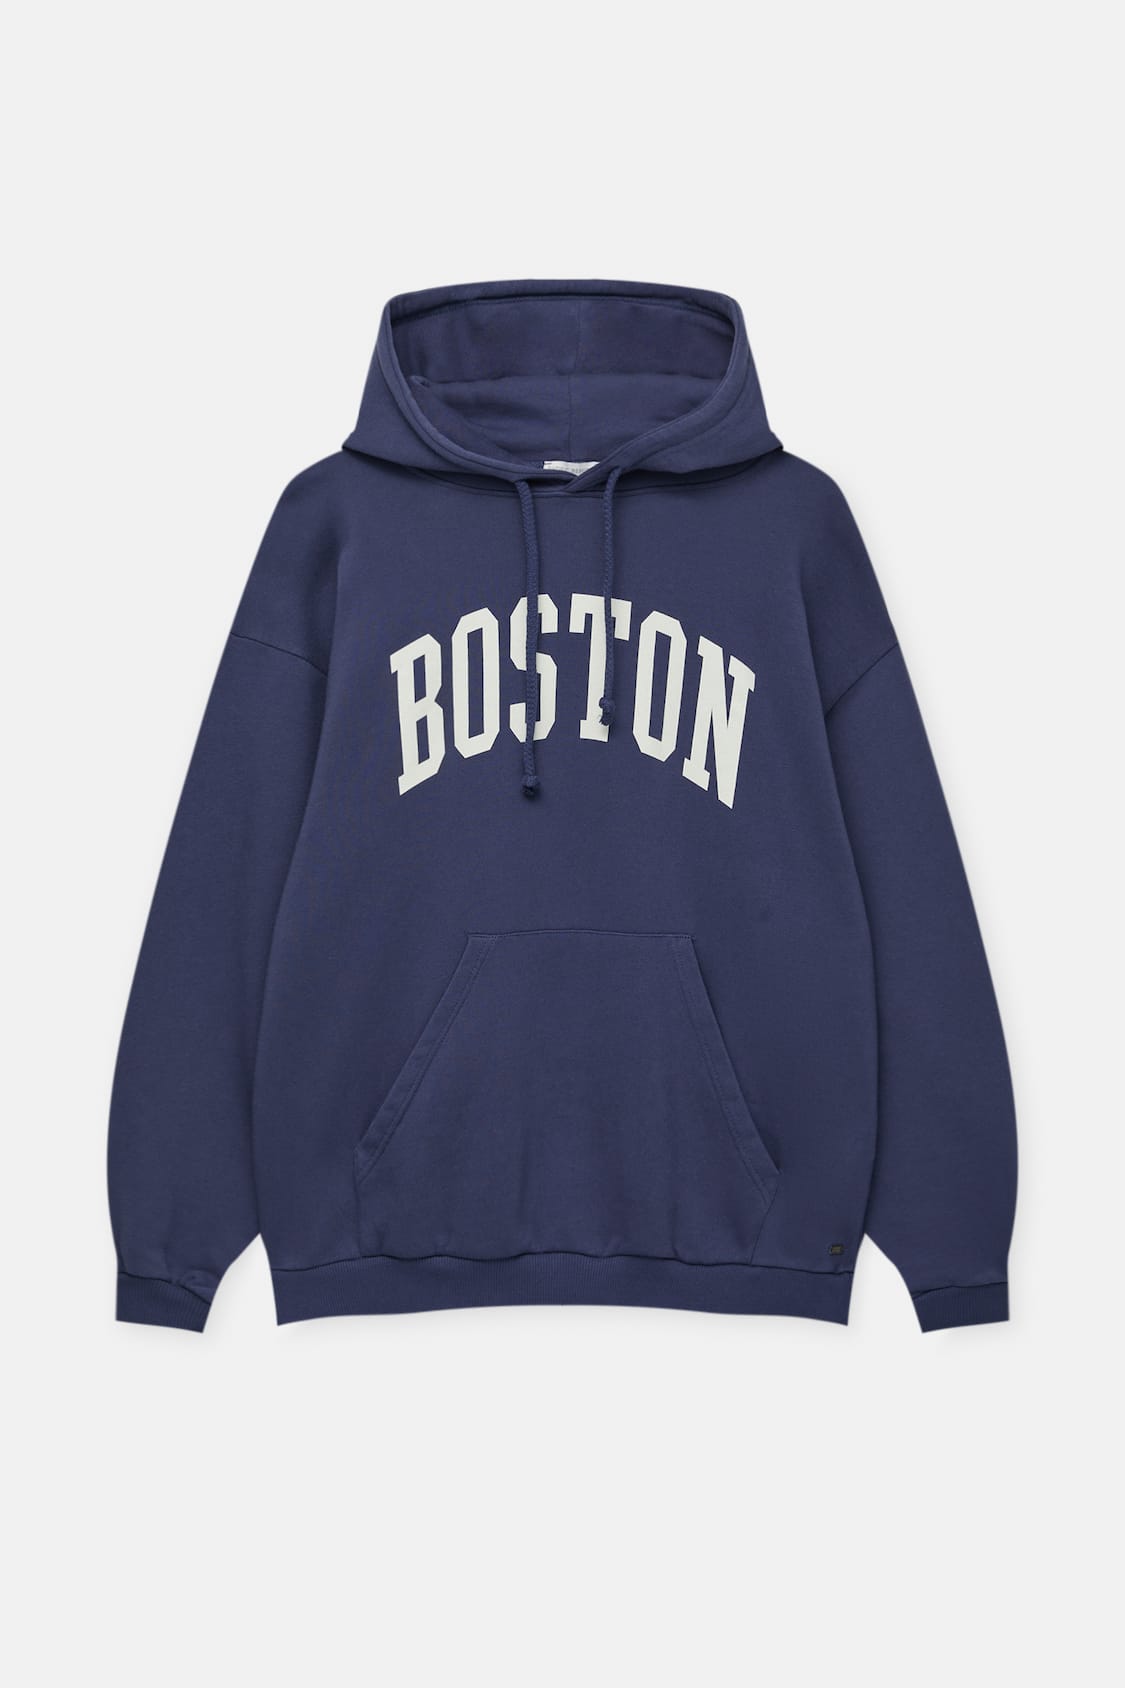 Boston Sweatshirts, Boston University Hoodie, Boston Hoodies